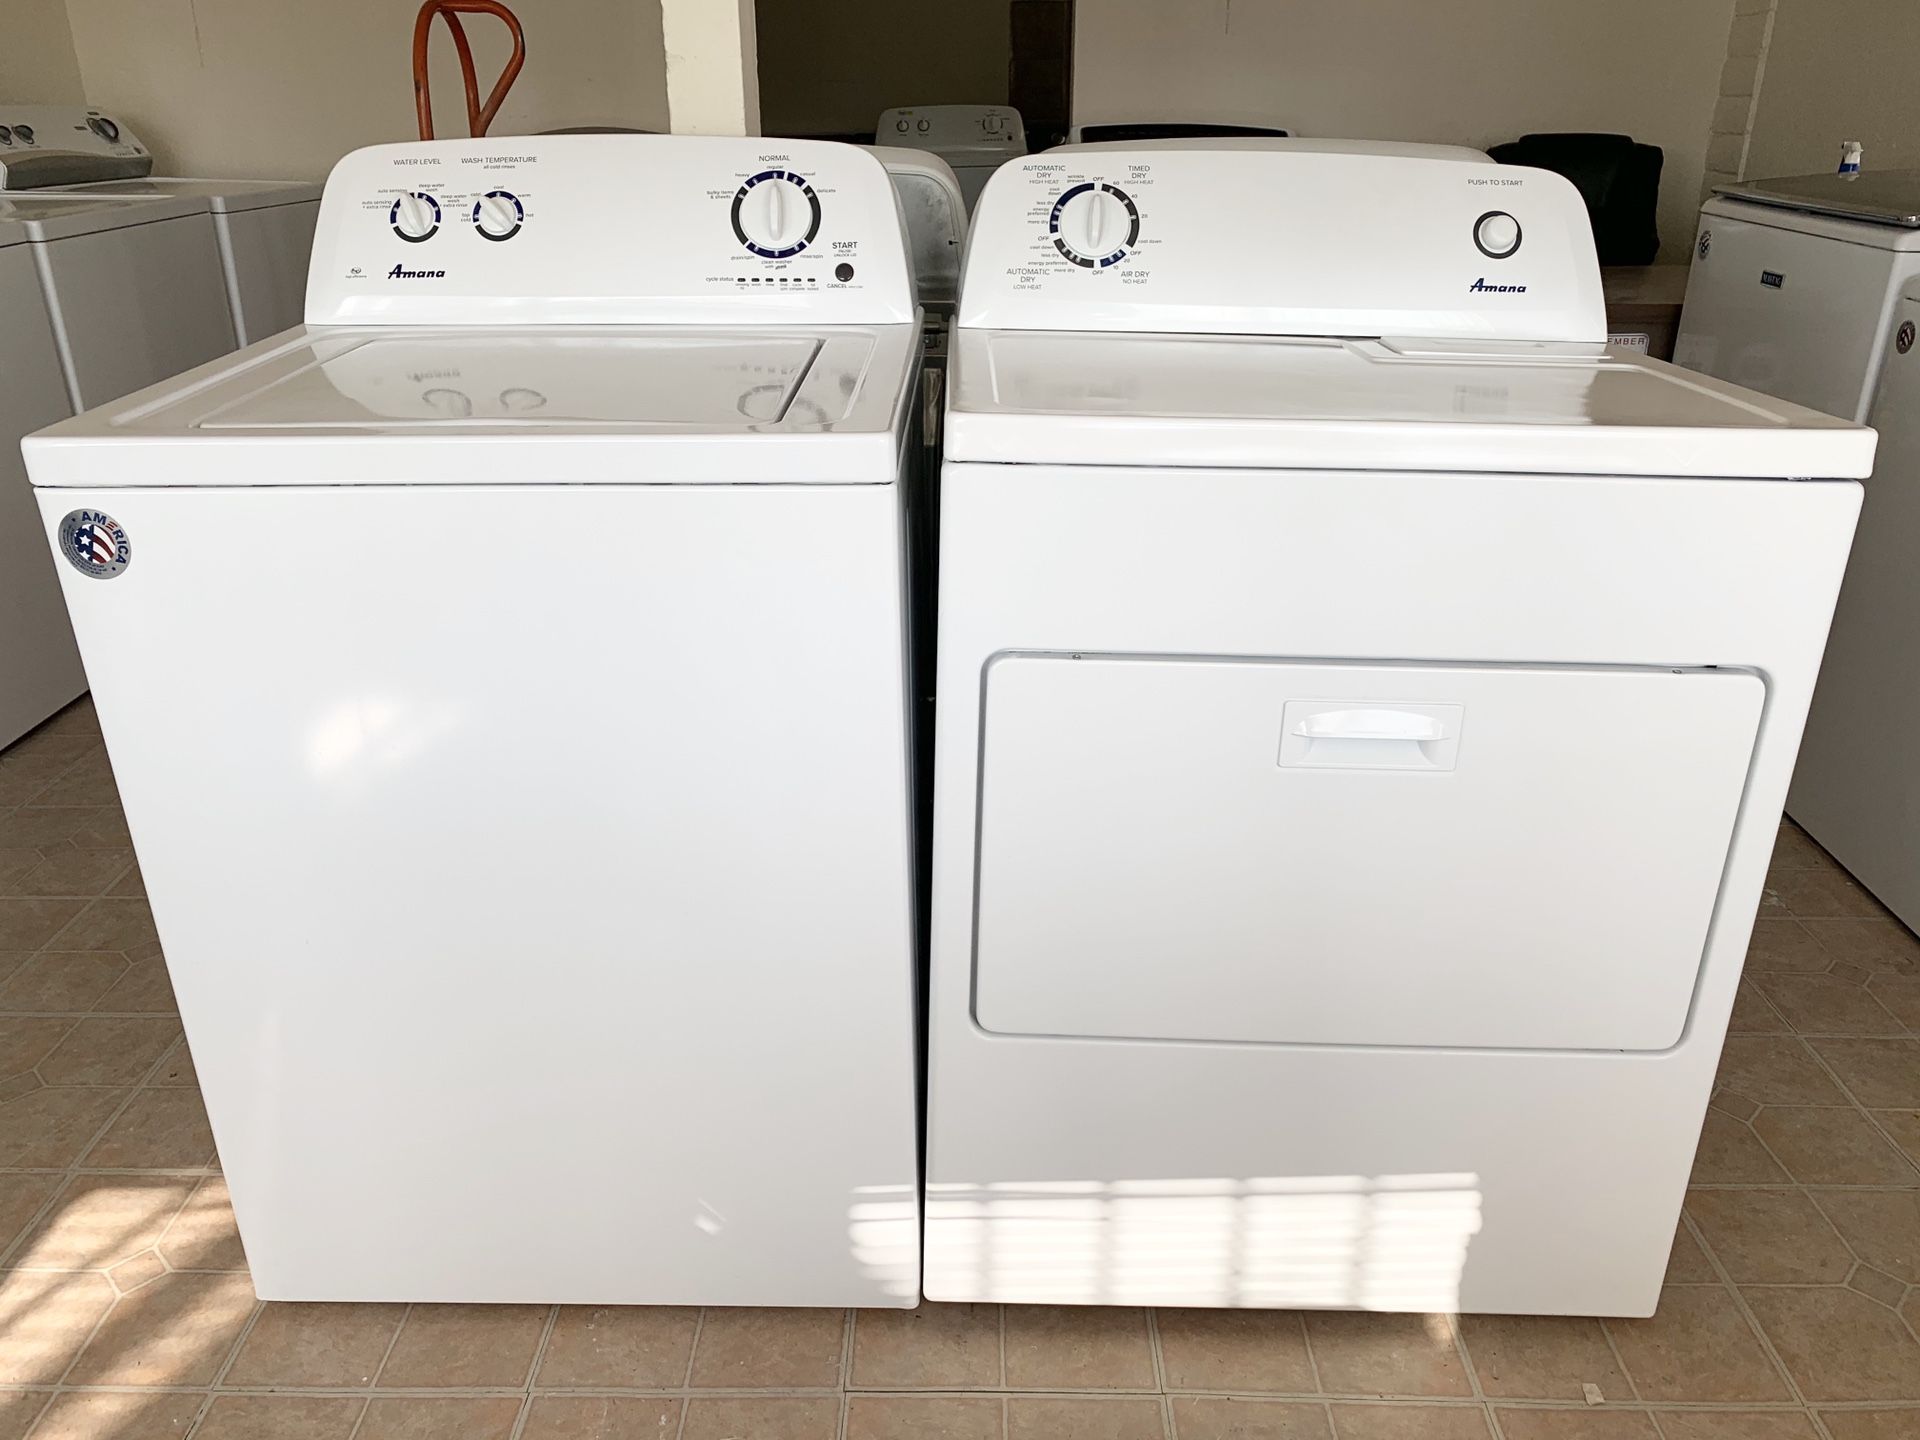 Amana Washer and Dryer Set